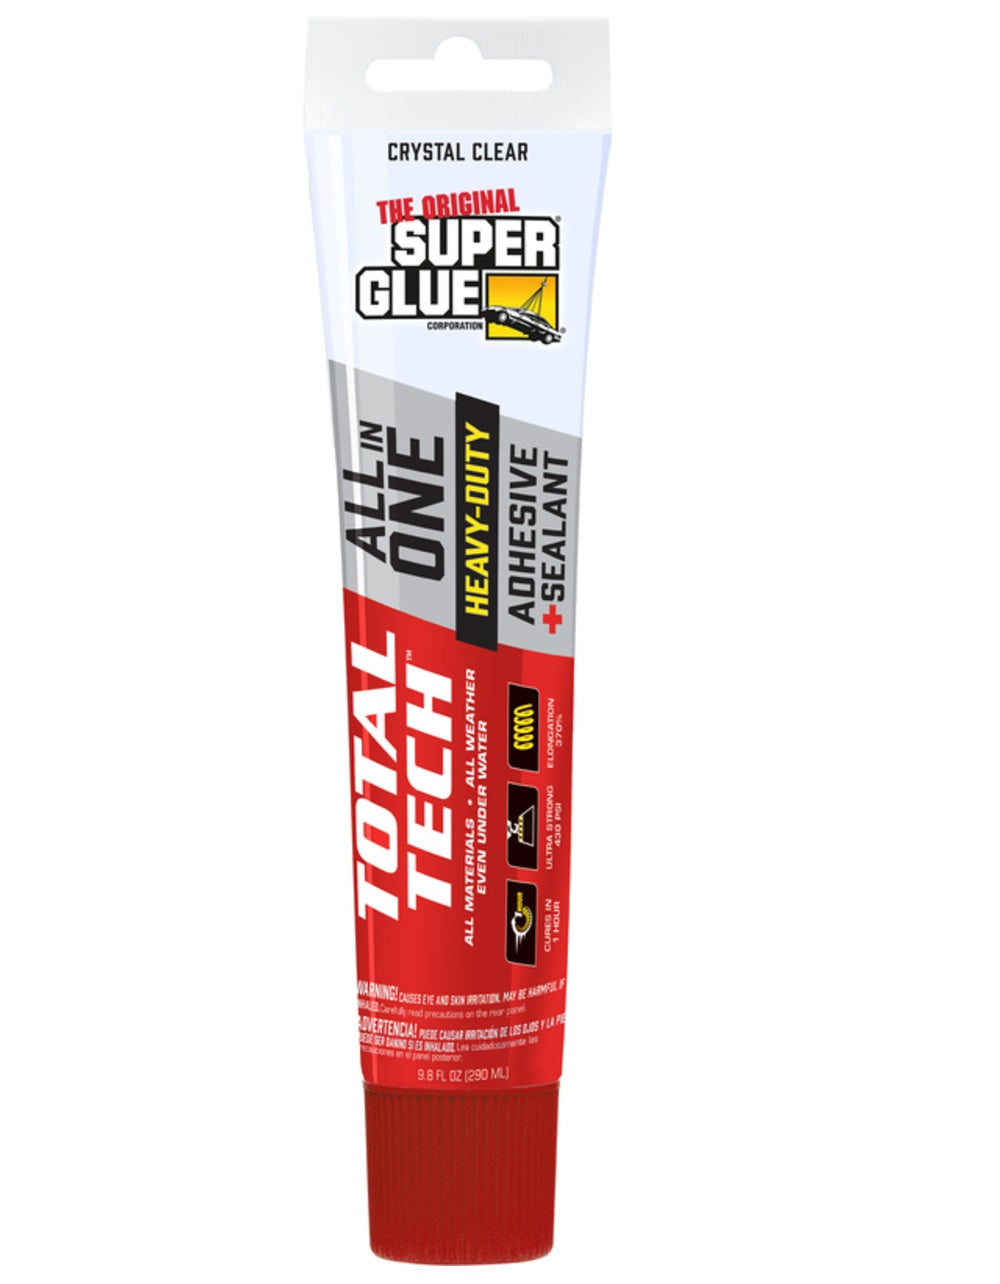 Super Glue 11711004 Total Tech Construction Adhesive Sealant, 4.2 Oz